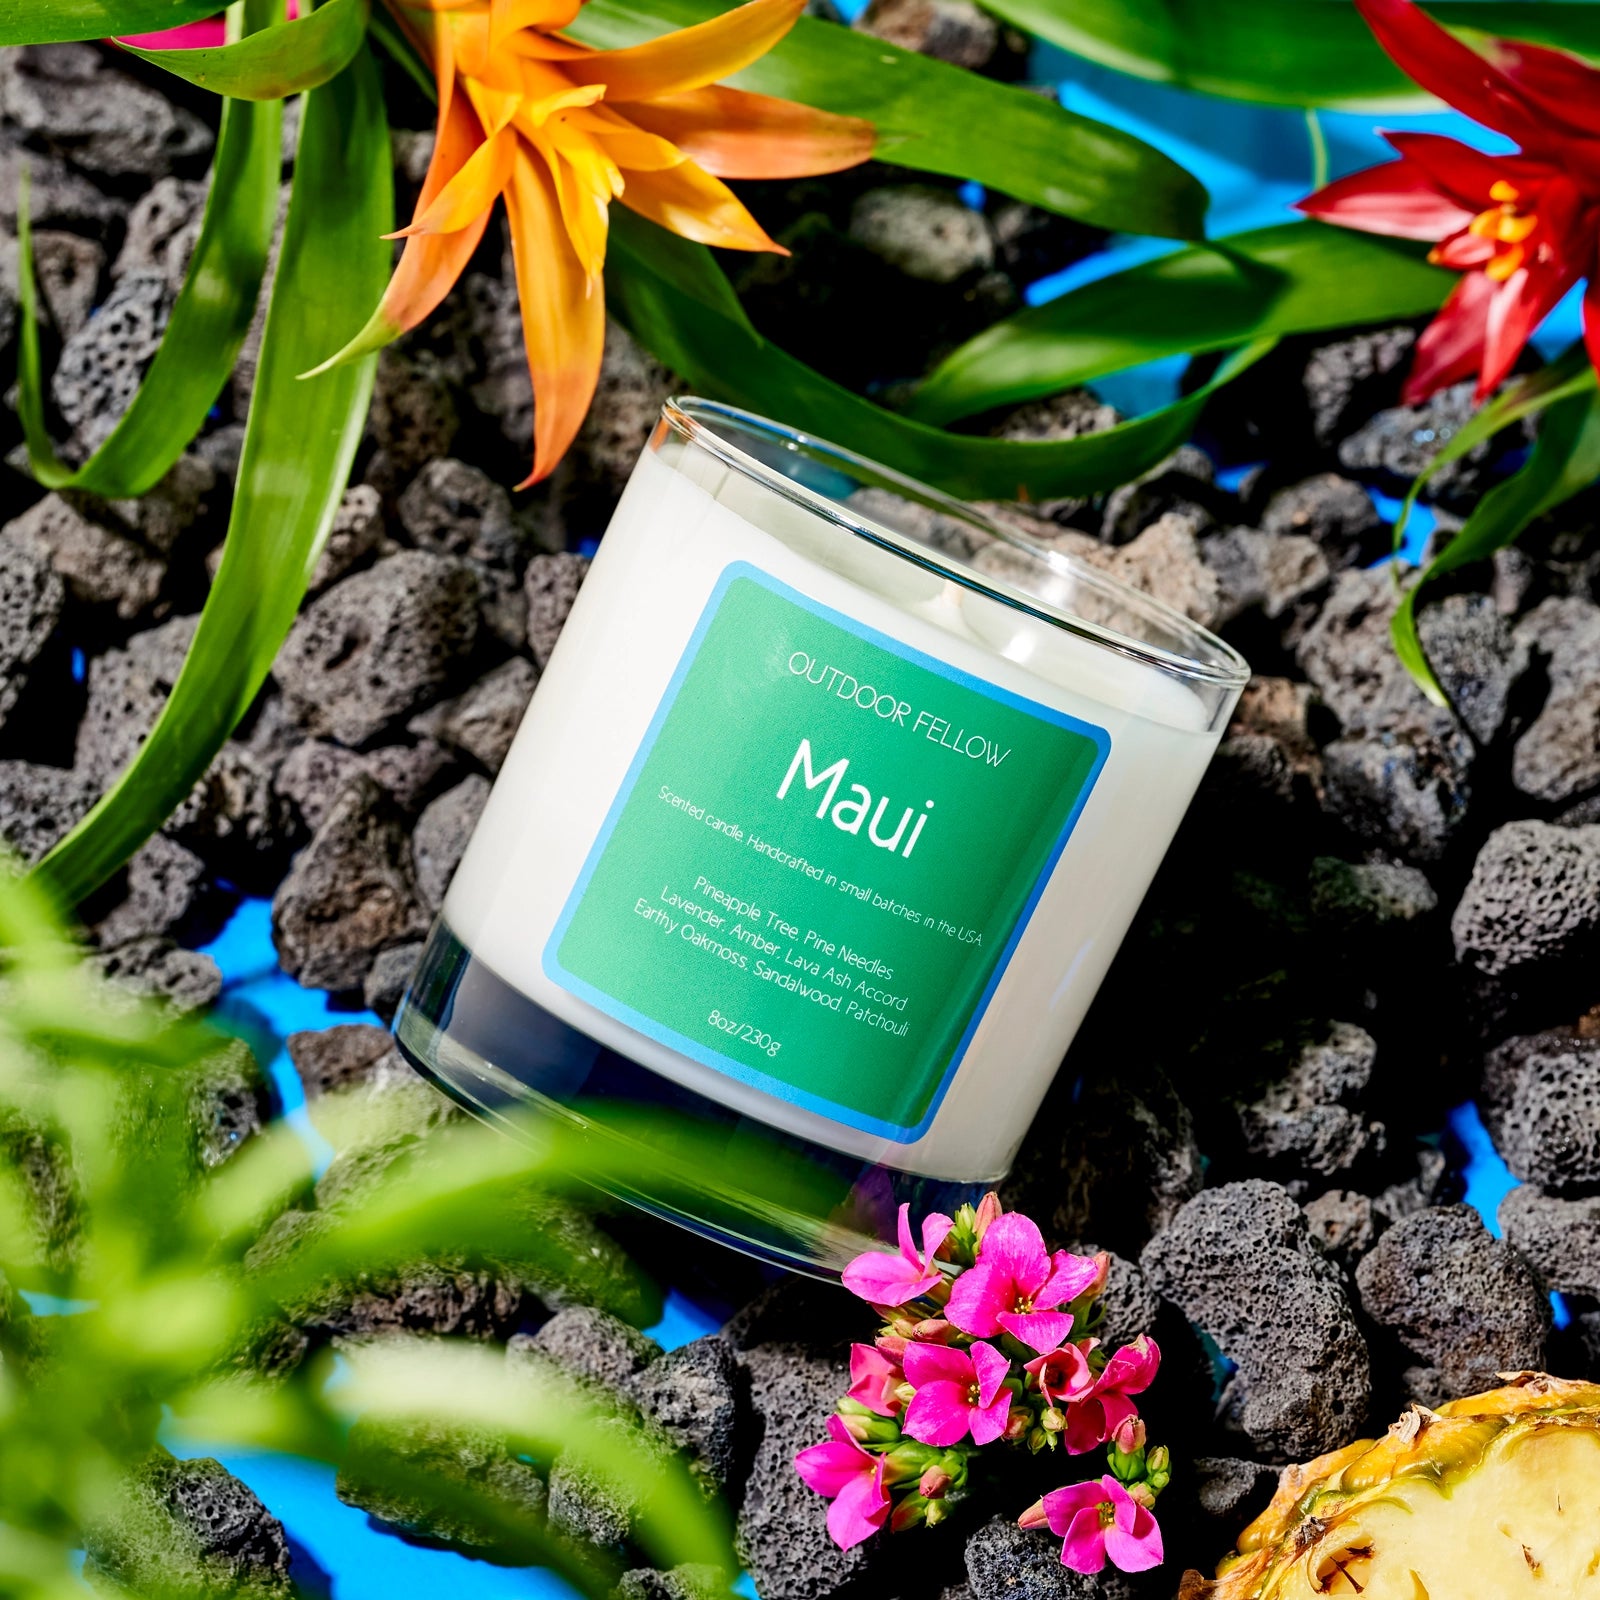 Maui scented candle